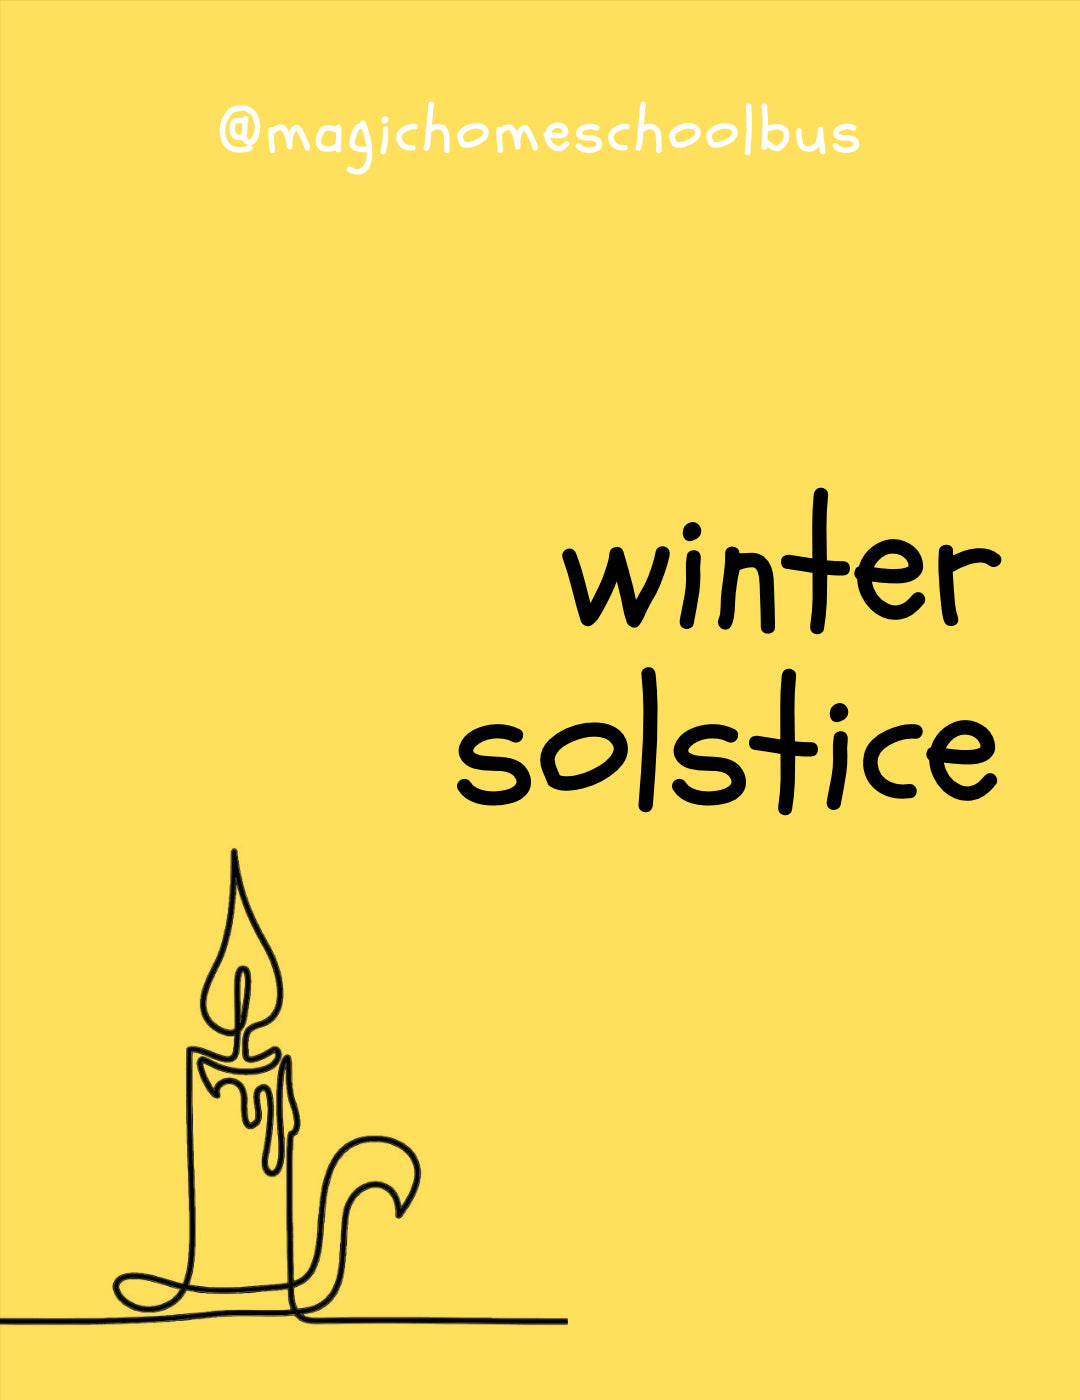 Magic Homeschool Bus - Winter Solstice Study